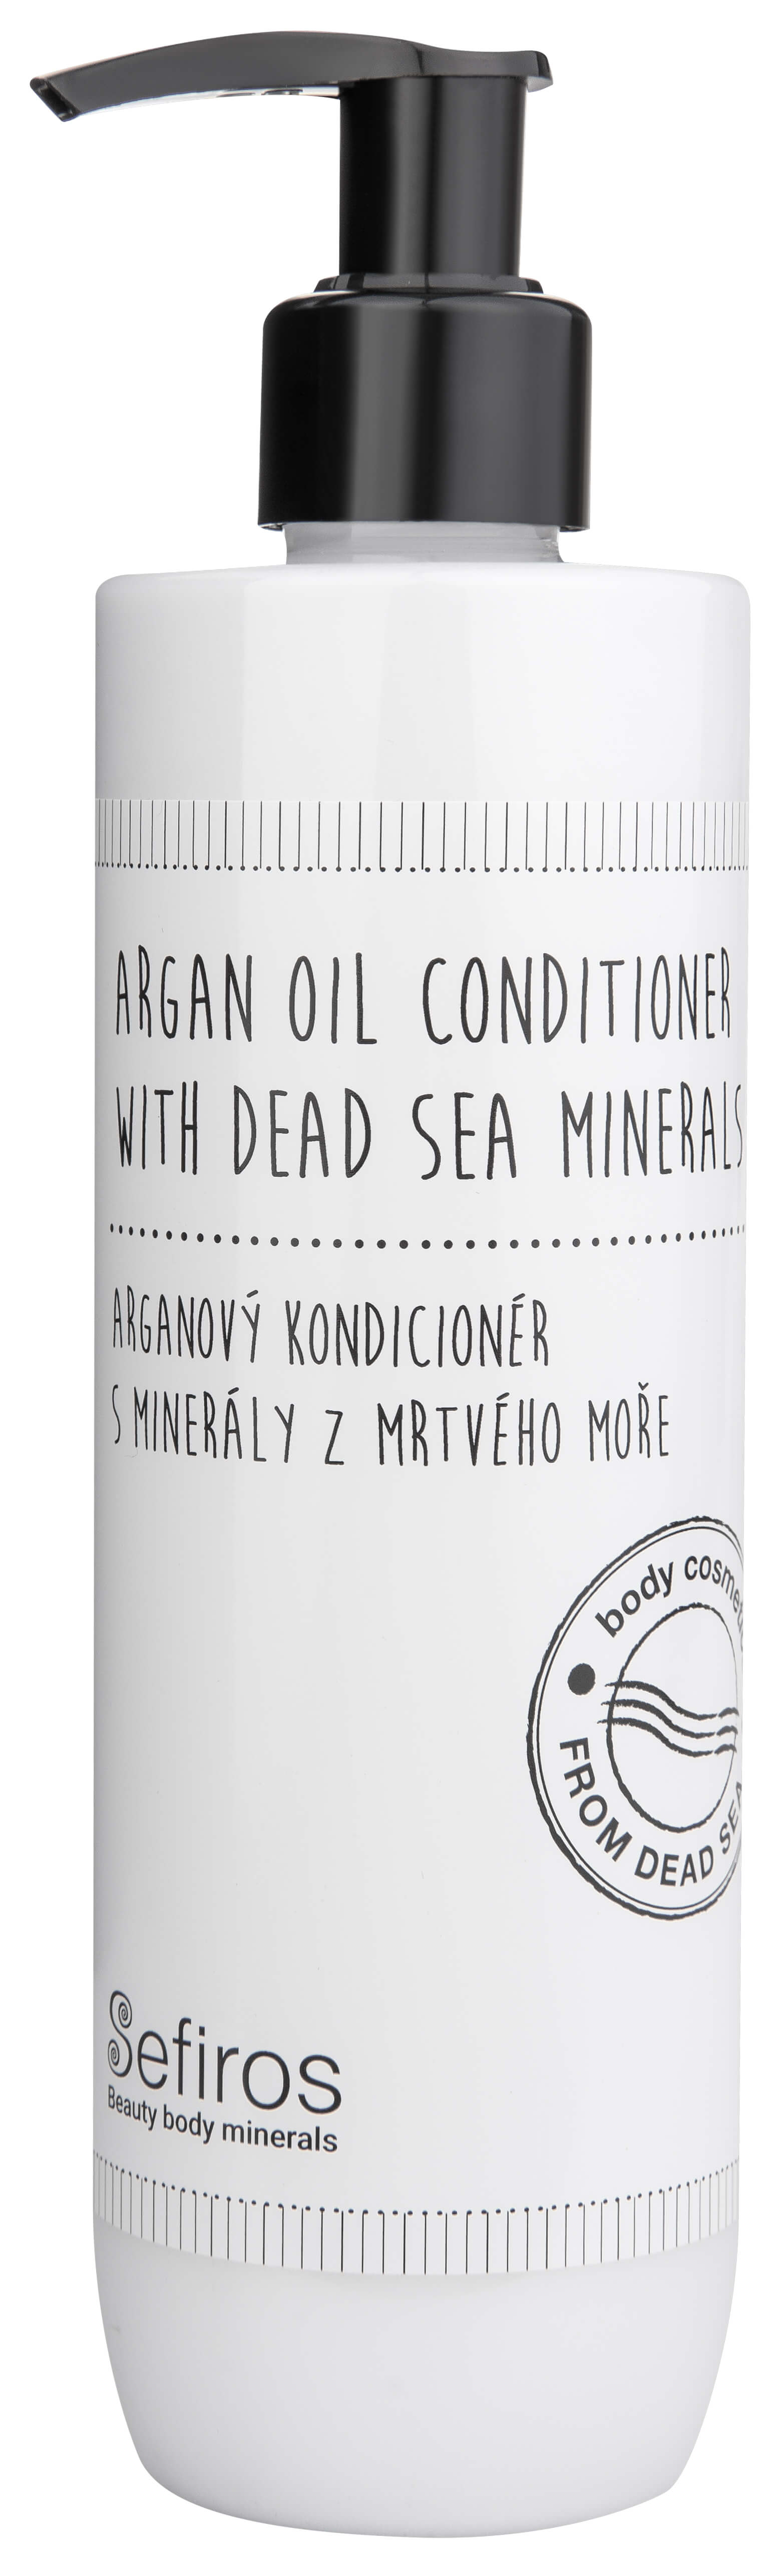 Sefiross Arganový kondicionér s minerály z Mrtvého moře (Argan Oil Conditioner With Dead Sea Minerals) 300 ml